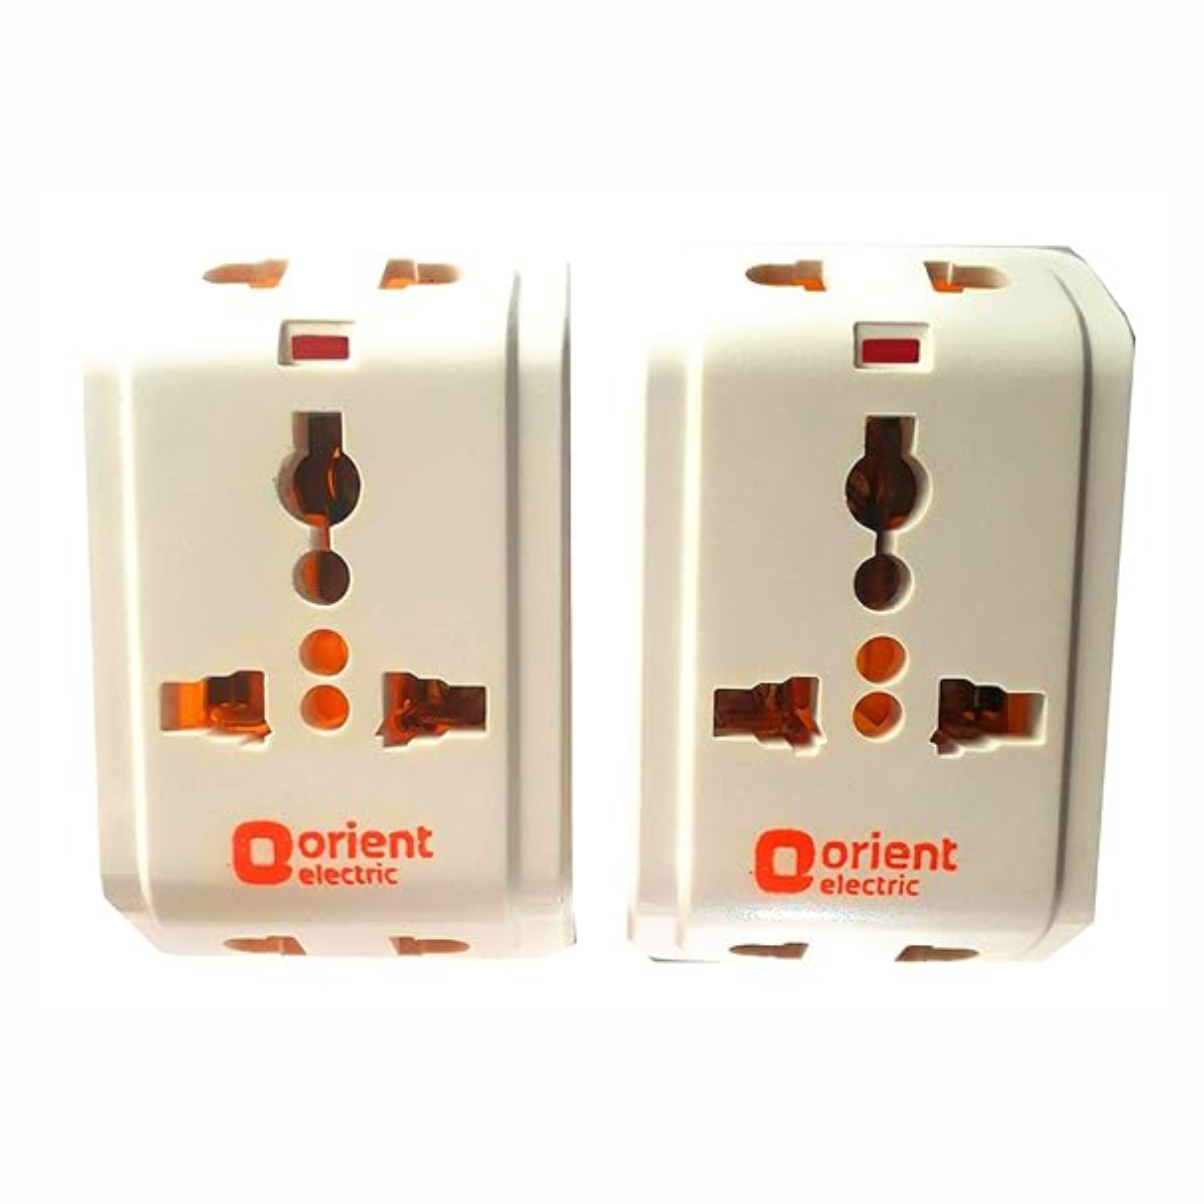 Orient Electric 3 pin Universal Multi plug Travel Adapter 6 Amp